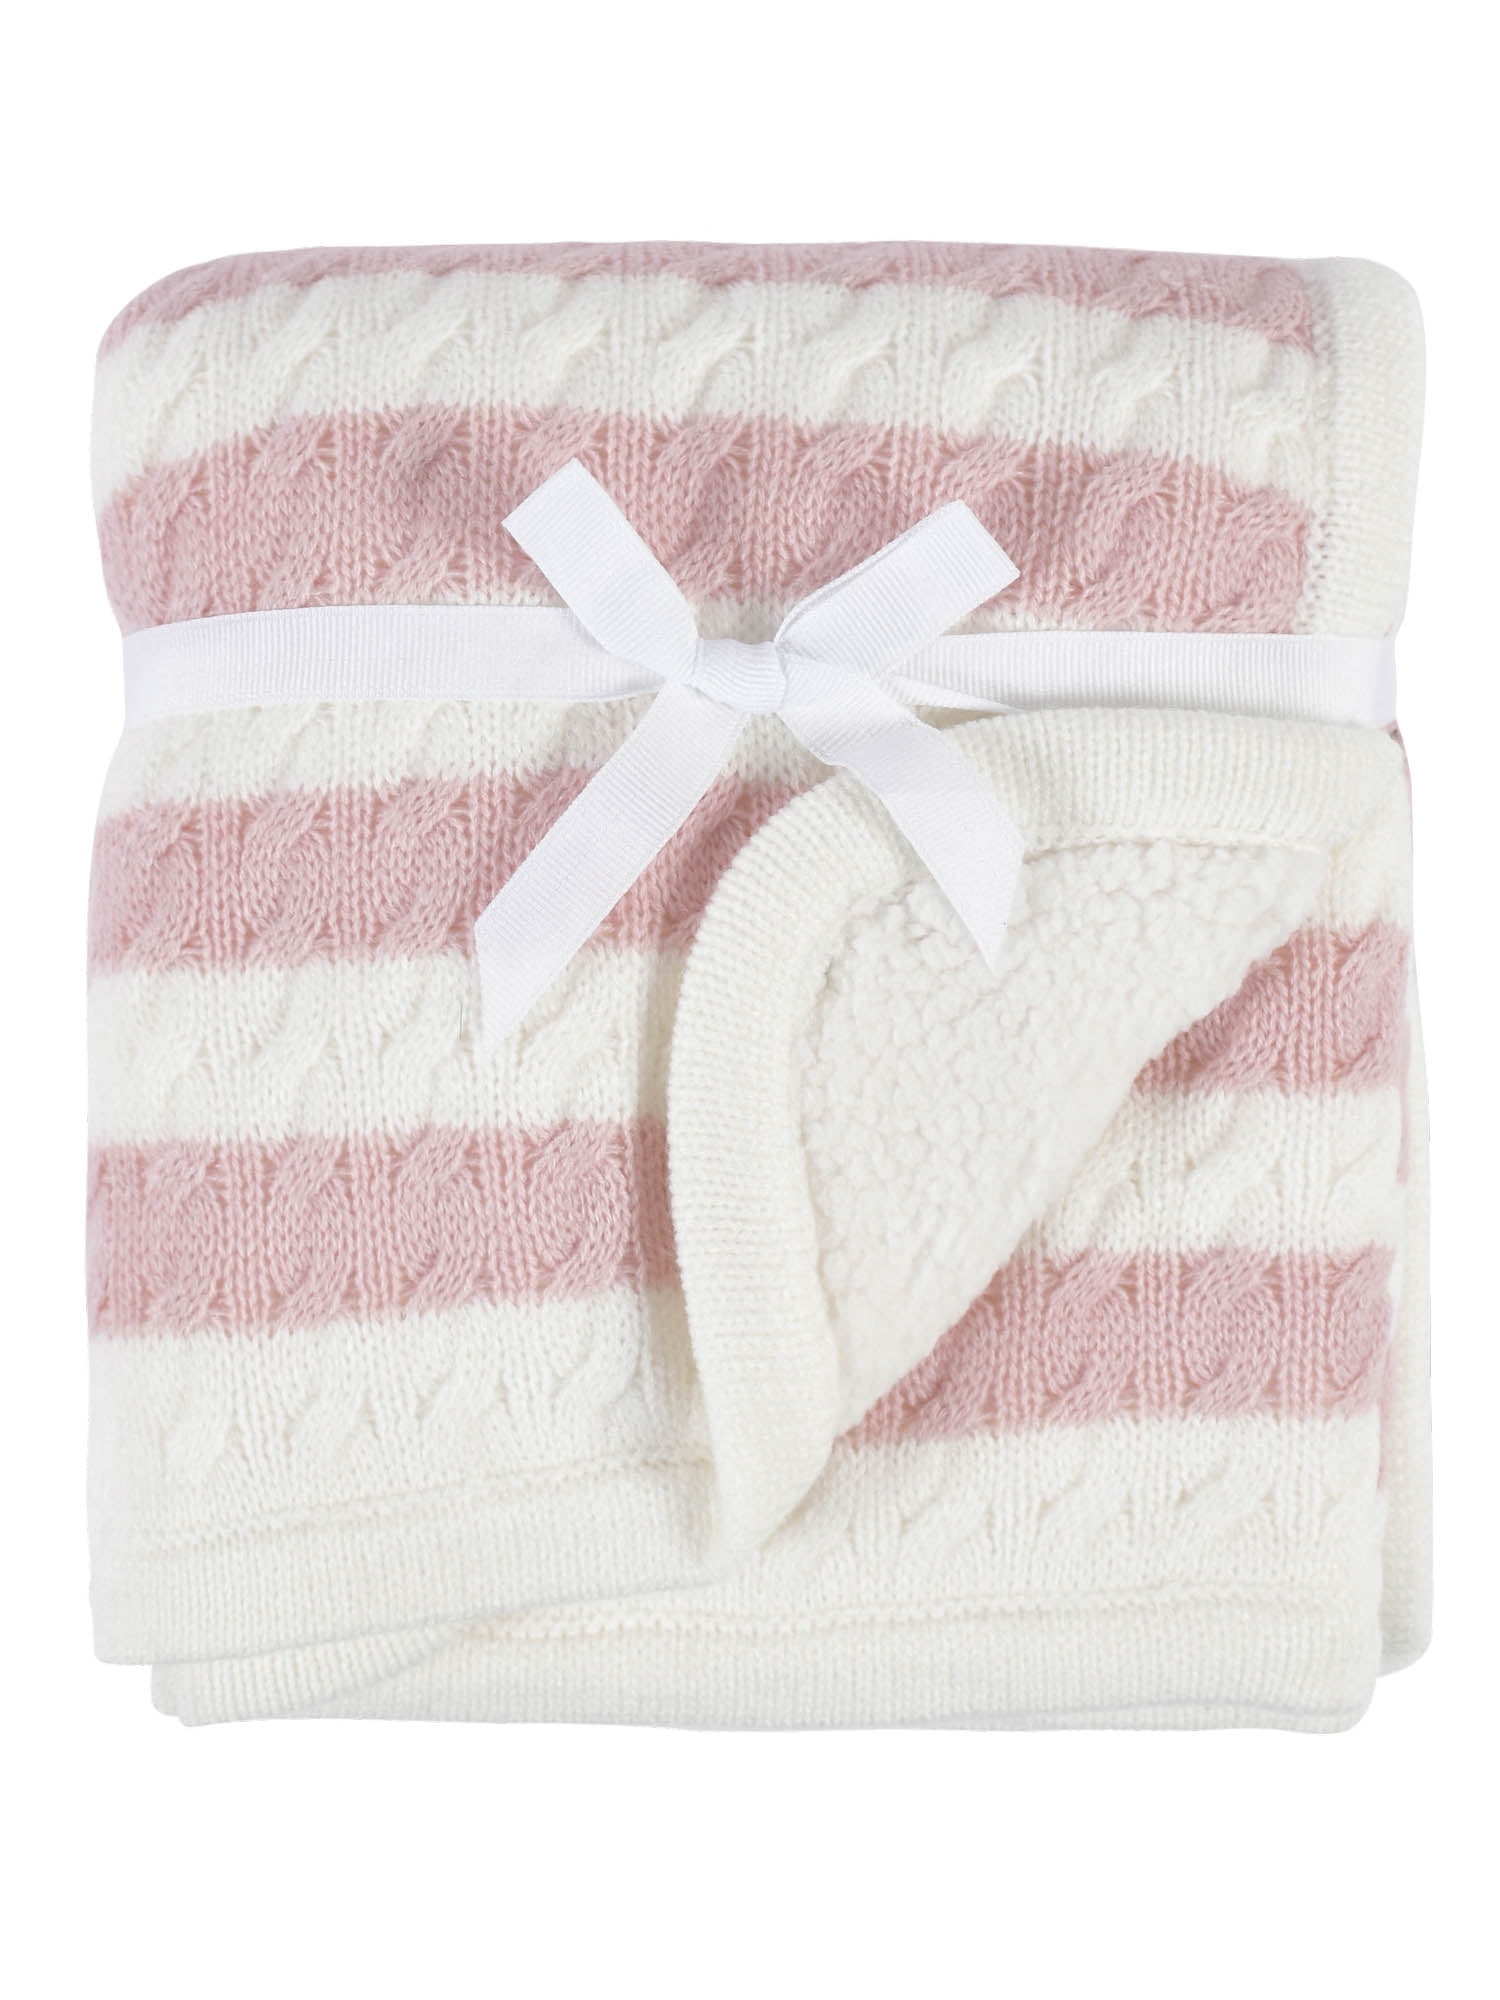 All Range Baby Boy Girl Supersoft Fleece Baby Blankets Baby Comforter For Pram, 